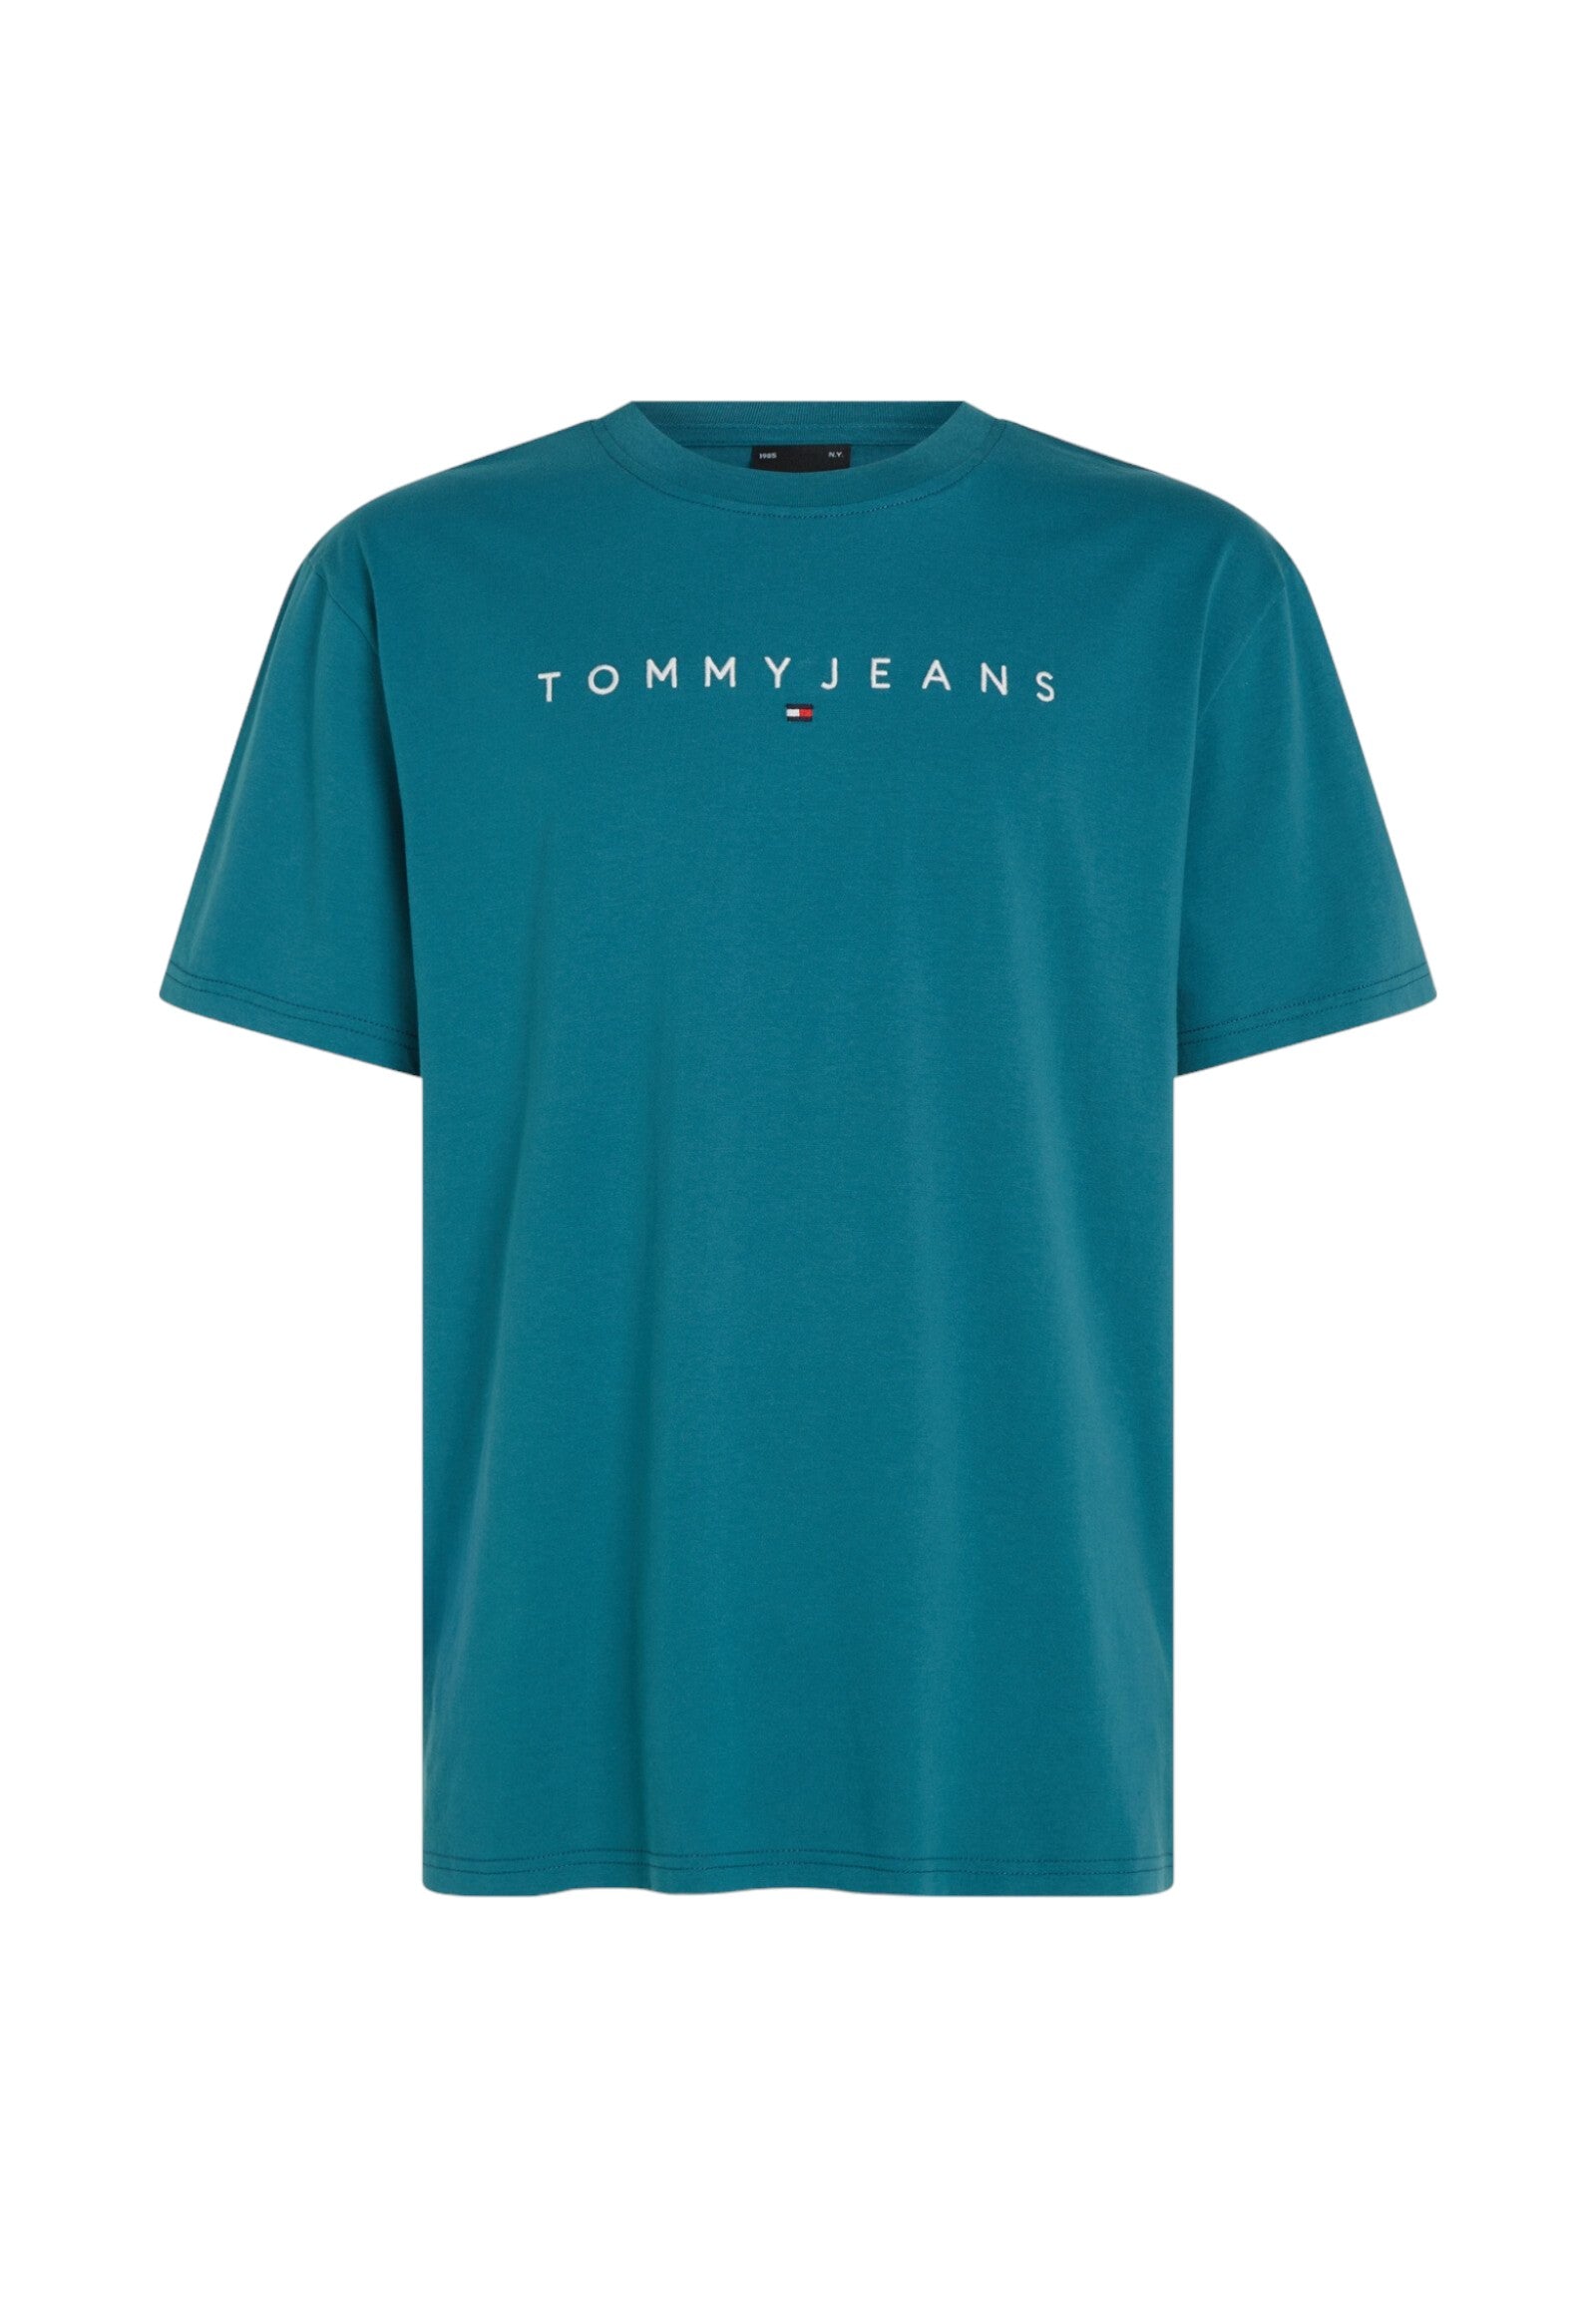 Tommy Jeans T-Shirt* Dm0dm17993 Timeless Teal